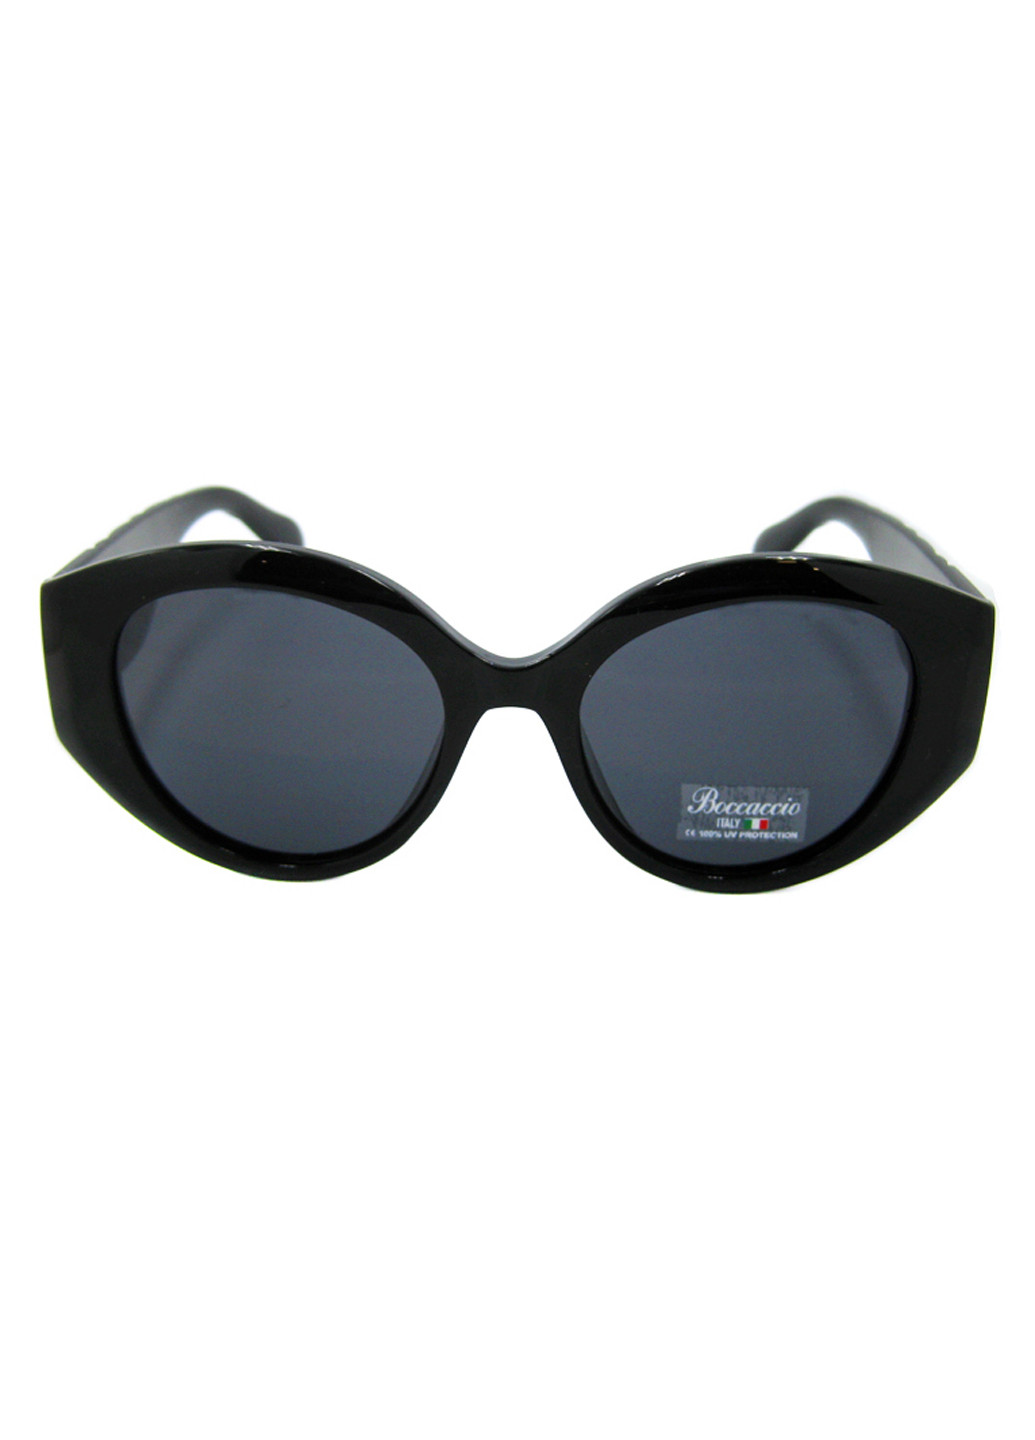 Сонцезахиснi окуляри Boccaccio bcp1845 (260817718)